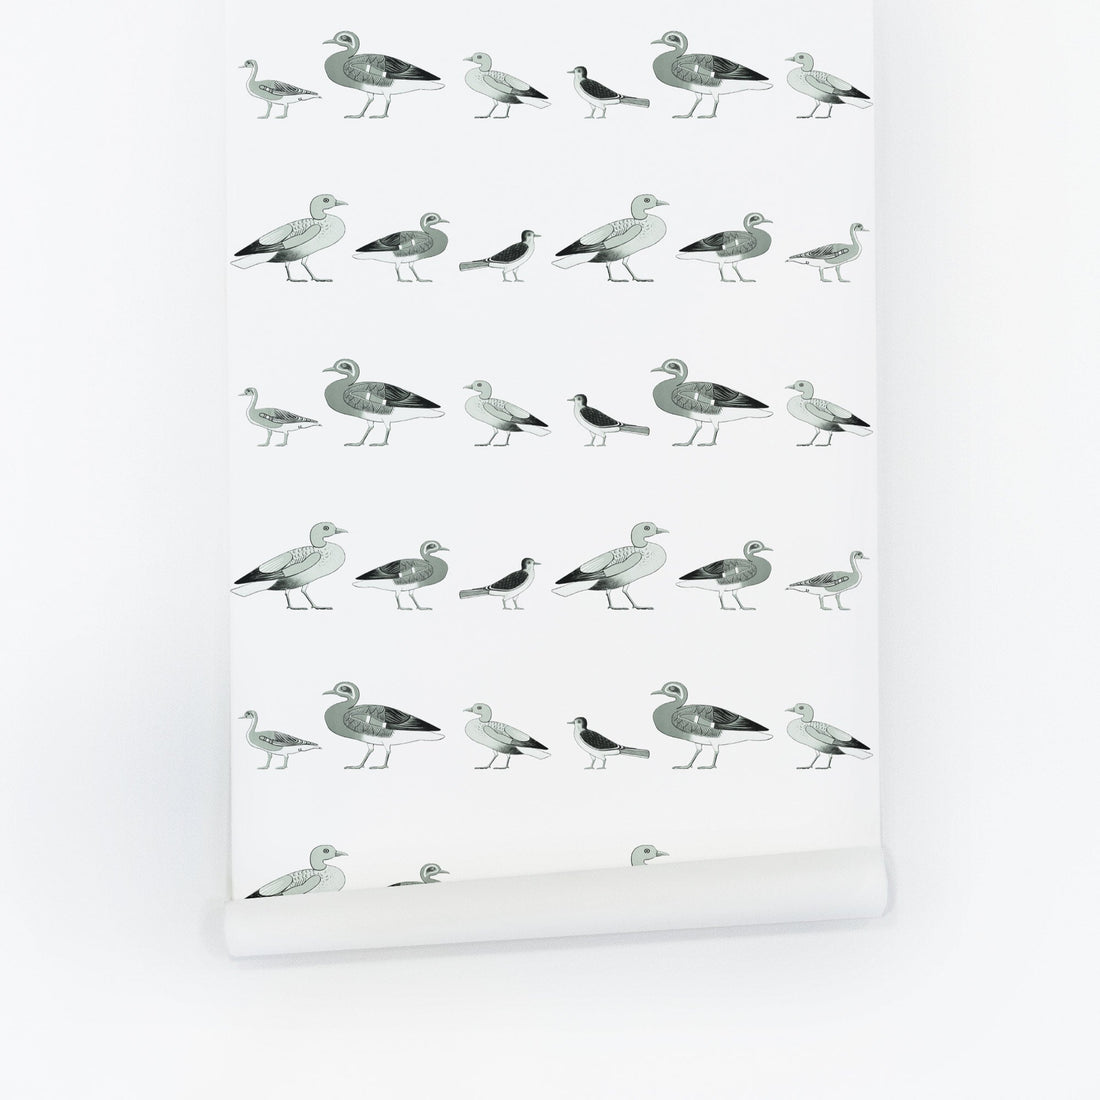 Duck design removable wallpaper for kids room interiors